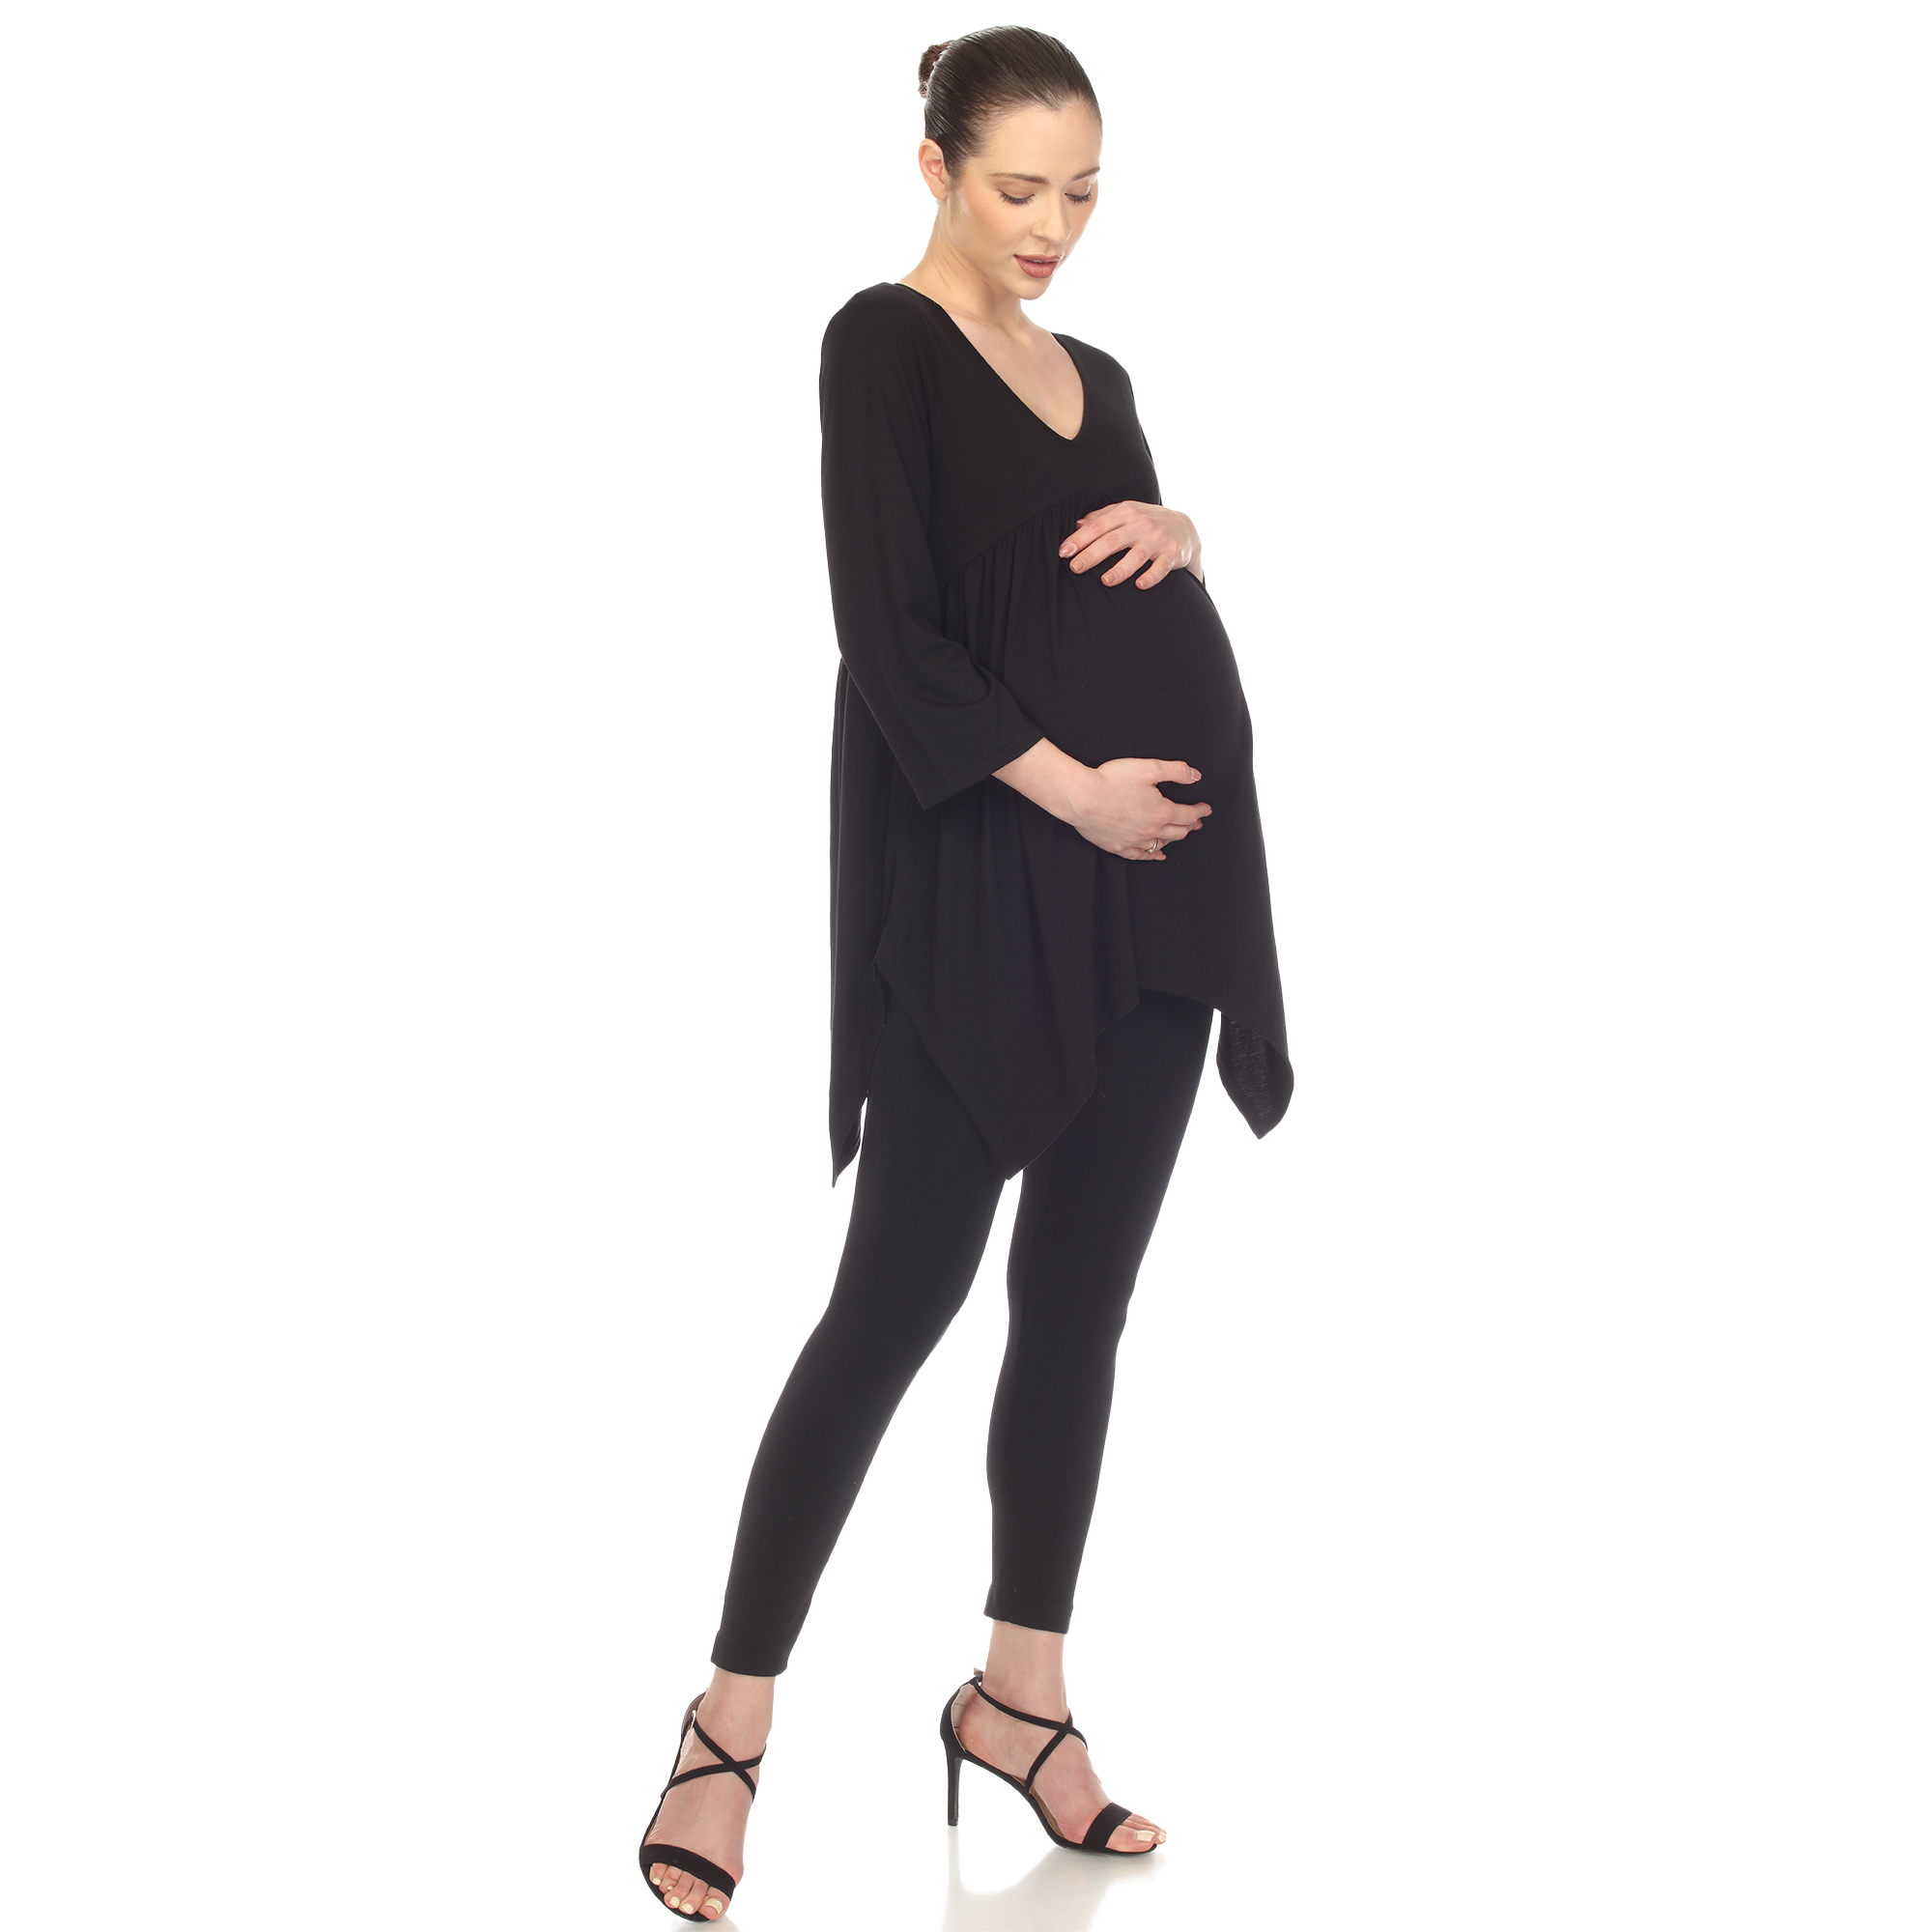 White Mark Women's Maternity Empire Waist V-Neck Tunic Top - Black, 2X